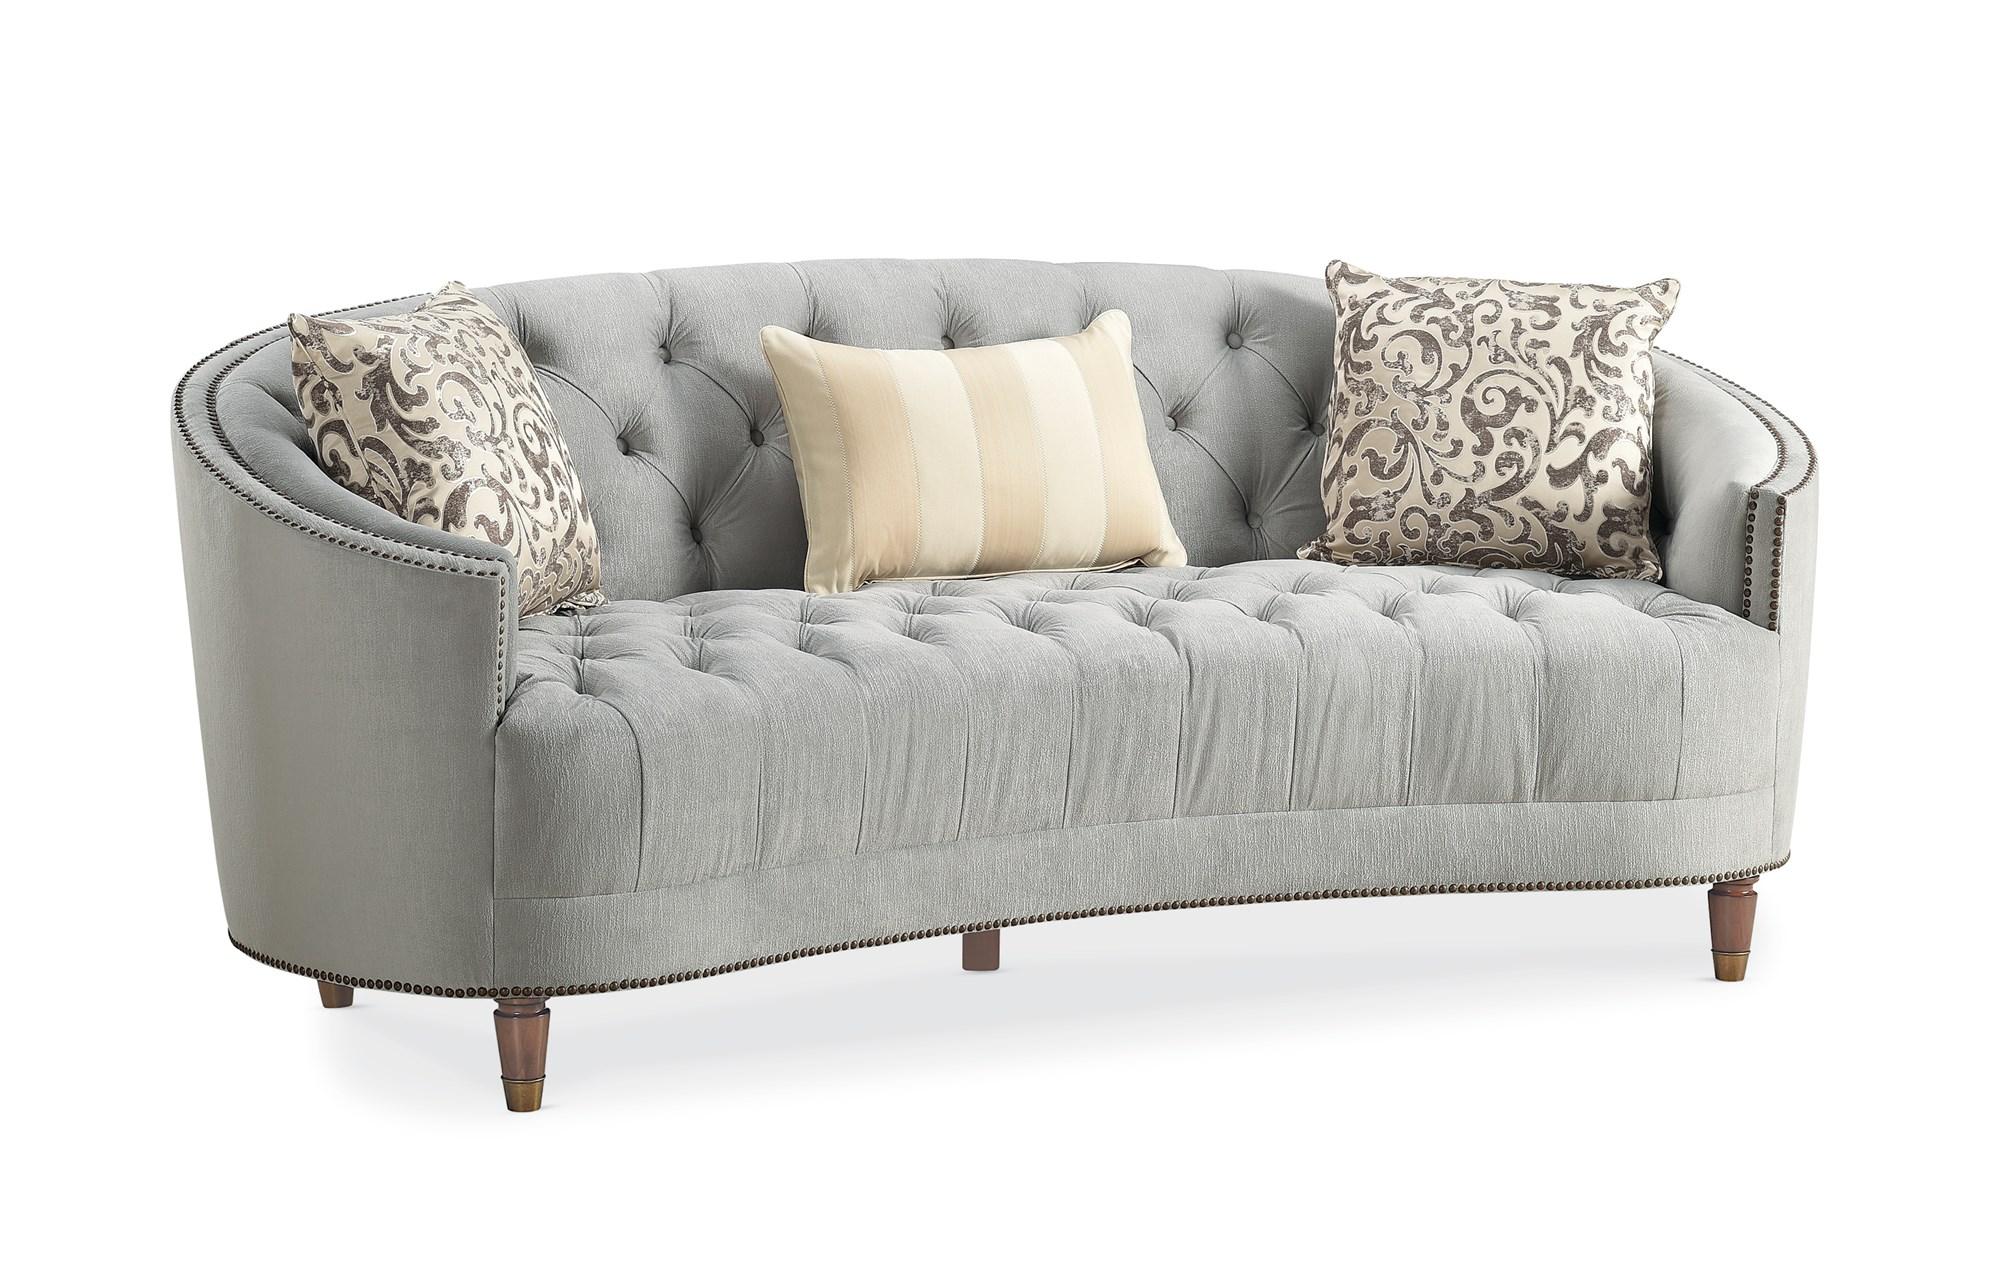 Traditional Sofa CLASSIC ELEGANCE SOFA 9090-182-K in Light Gray Chenille